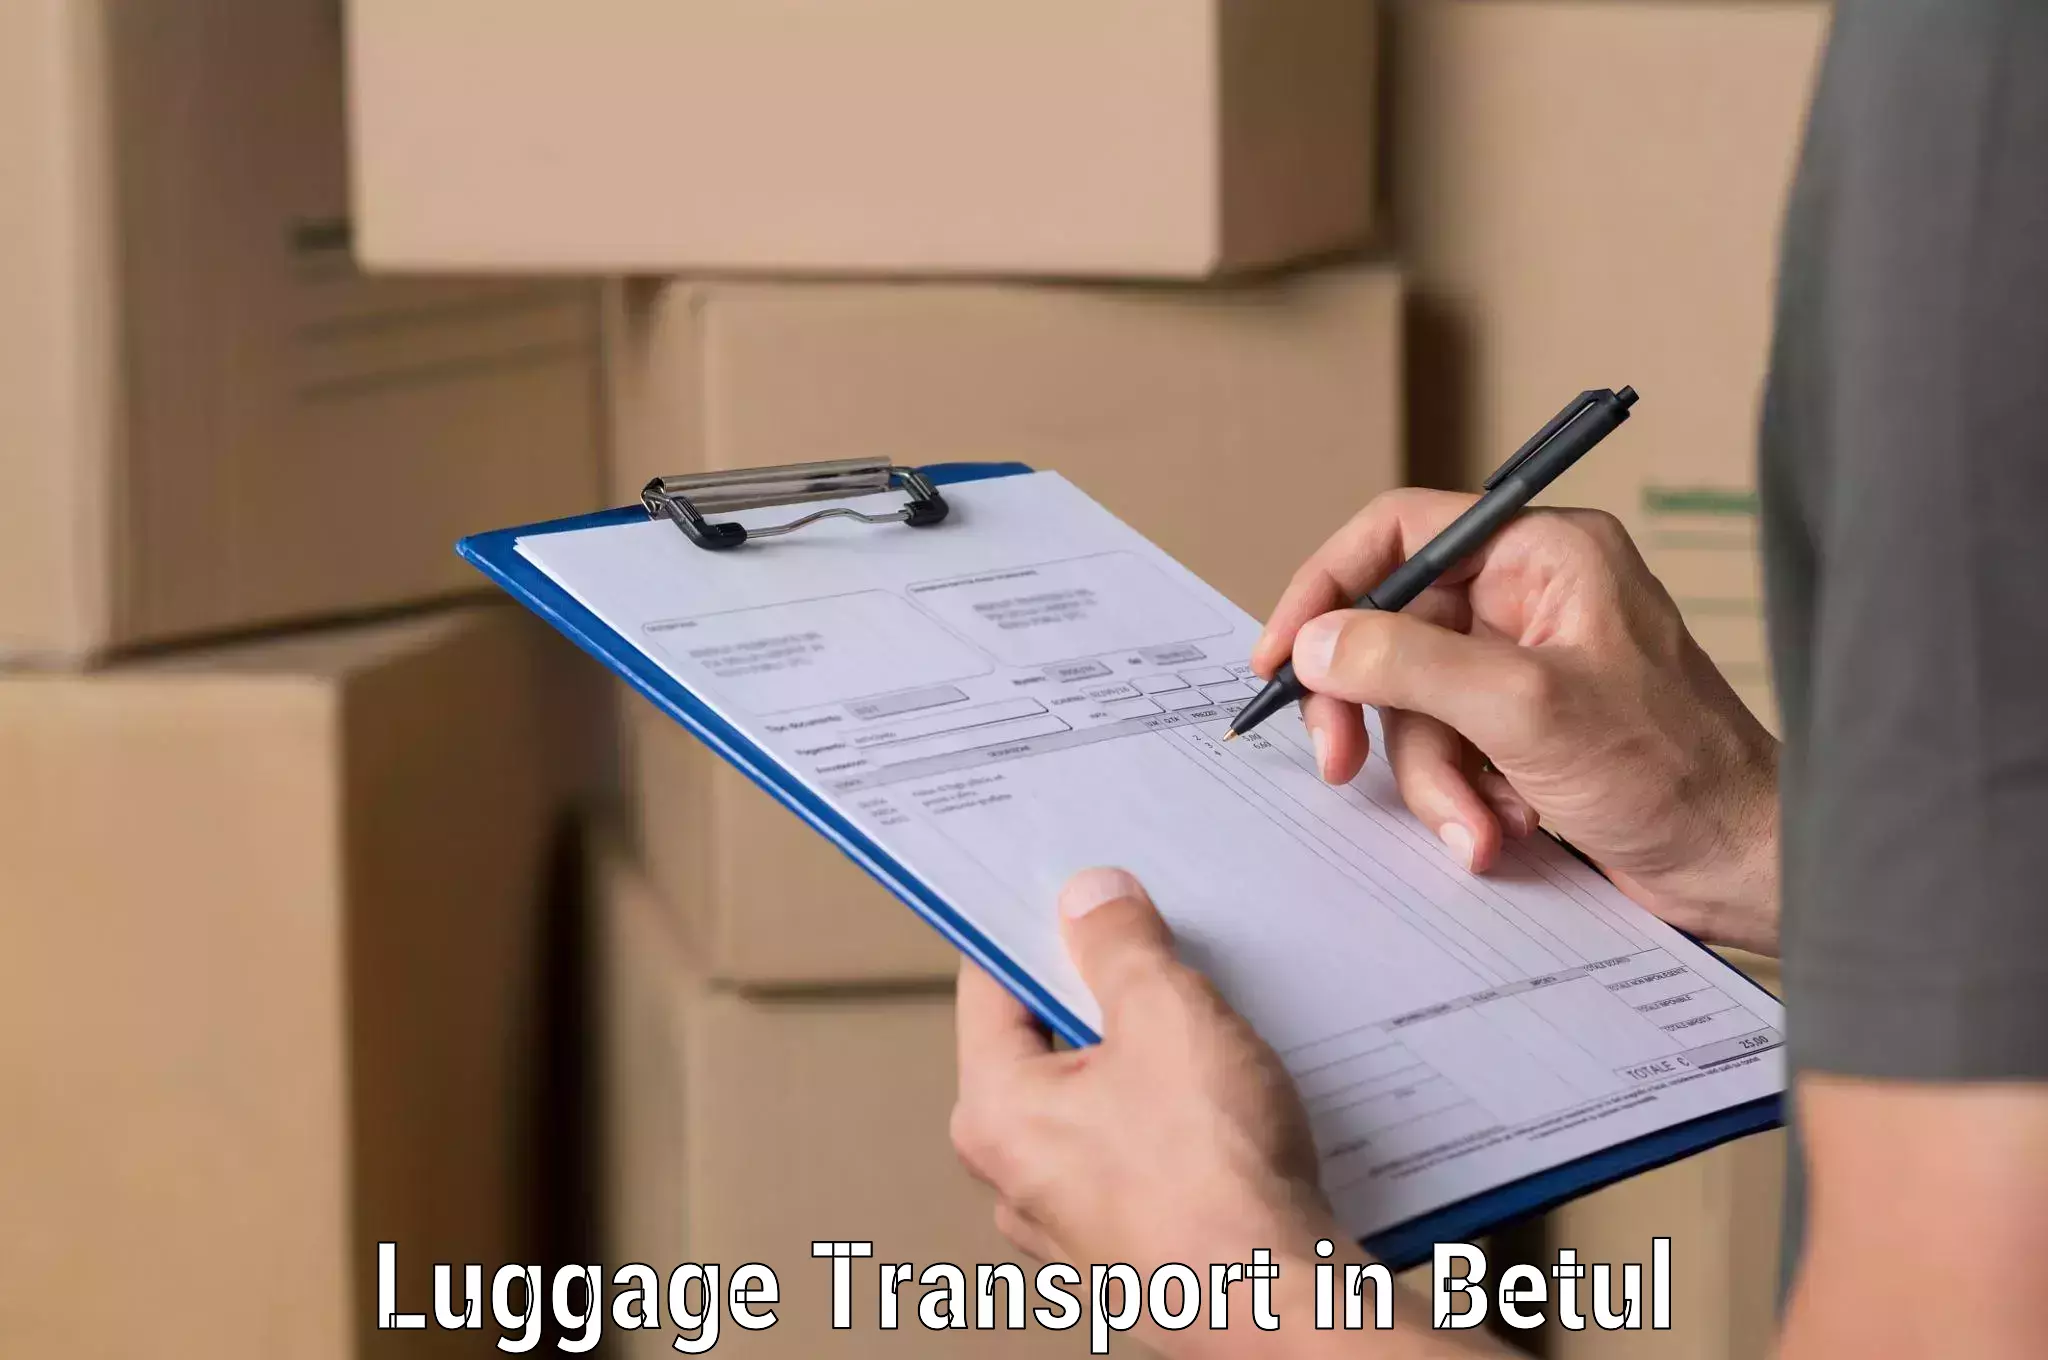 Luggage transport service in Betul